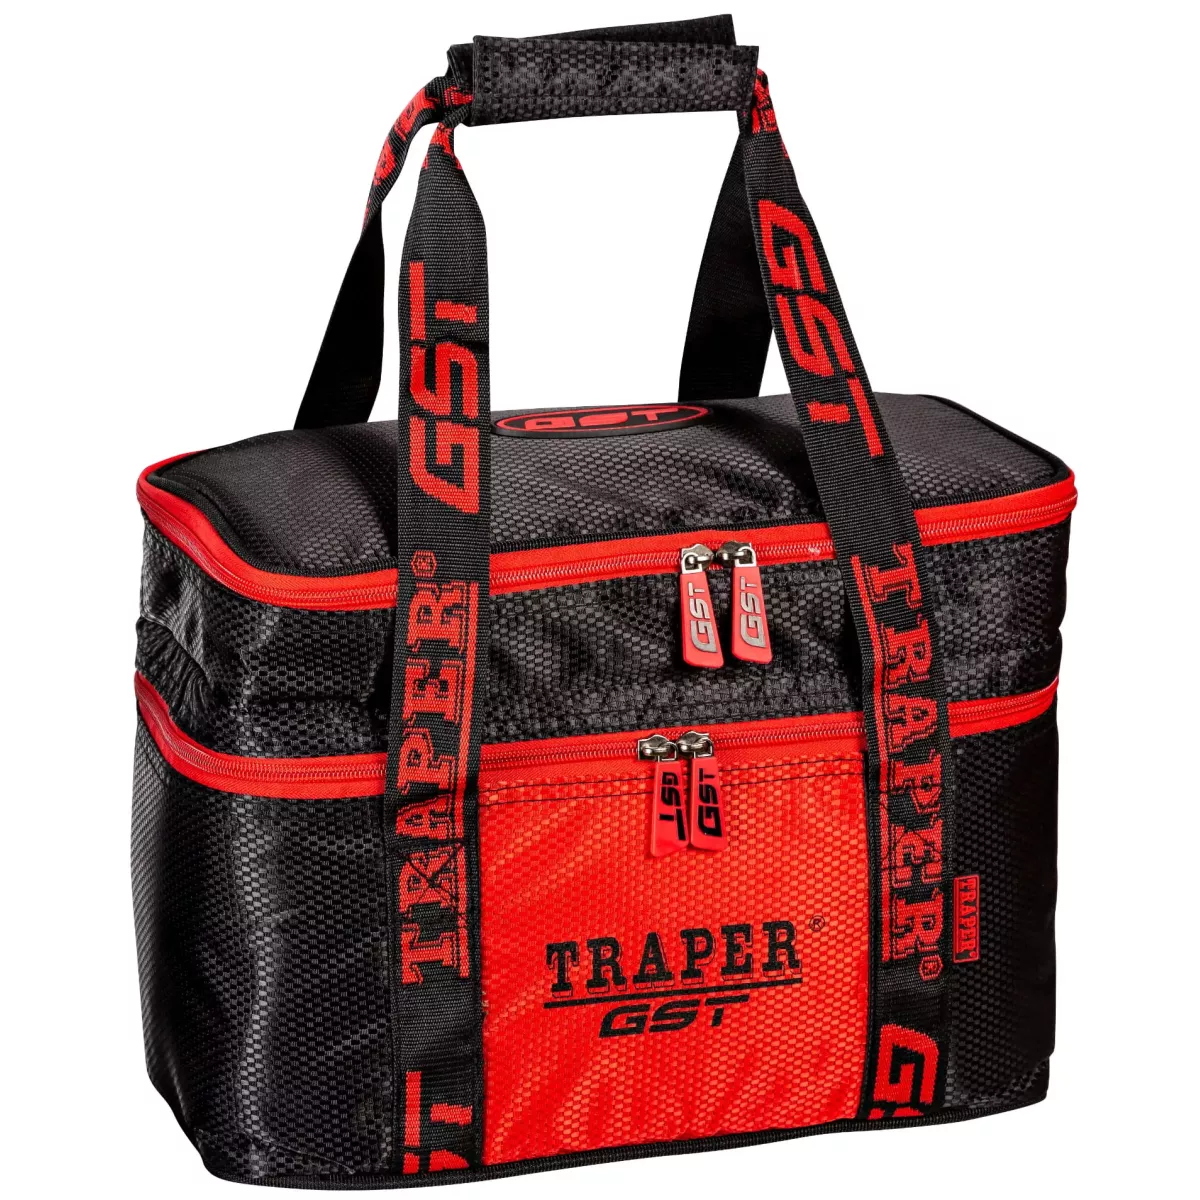 Torba Traper GST RED Cool Bag 81335